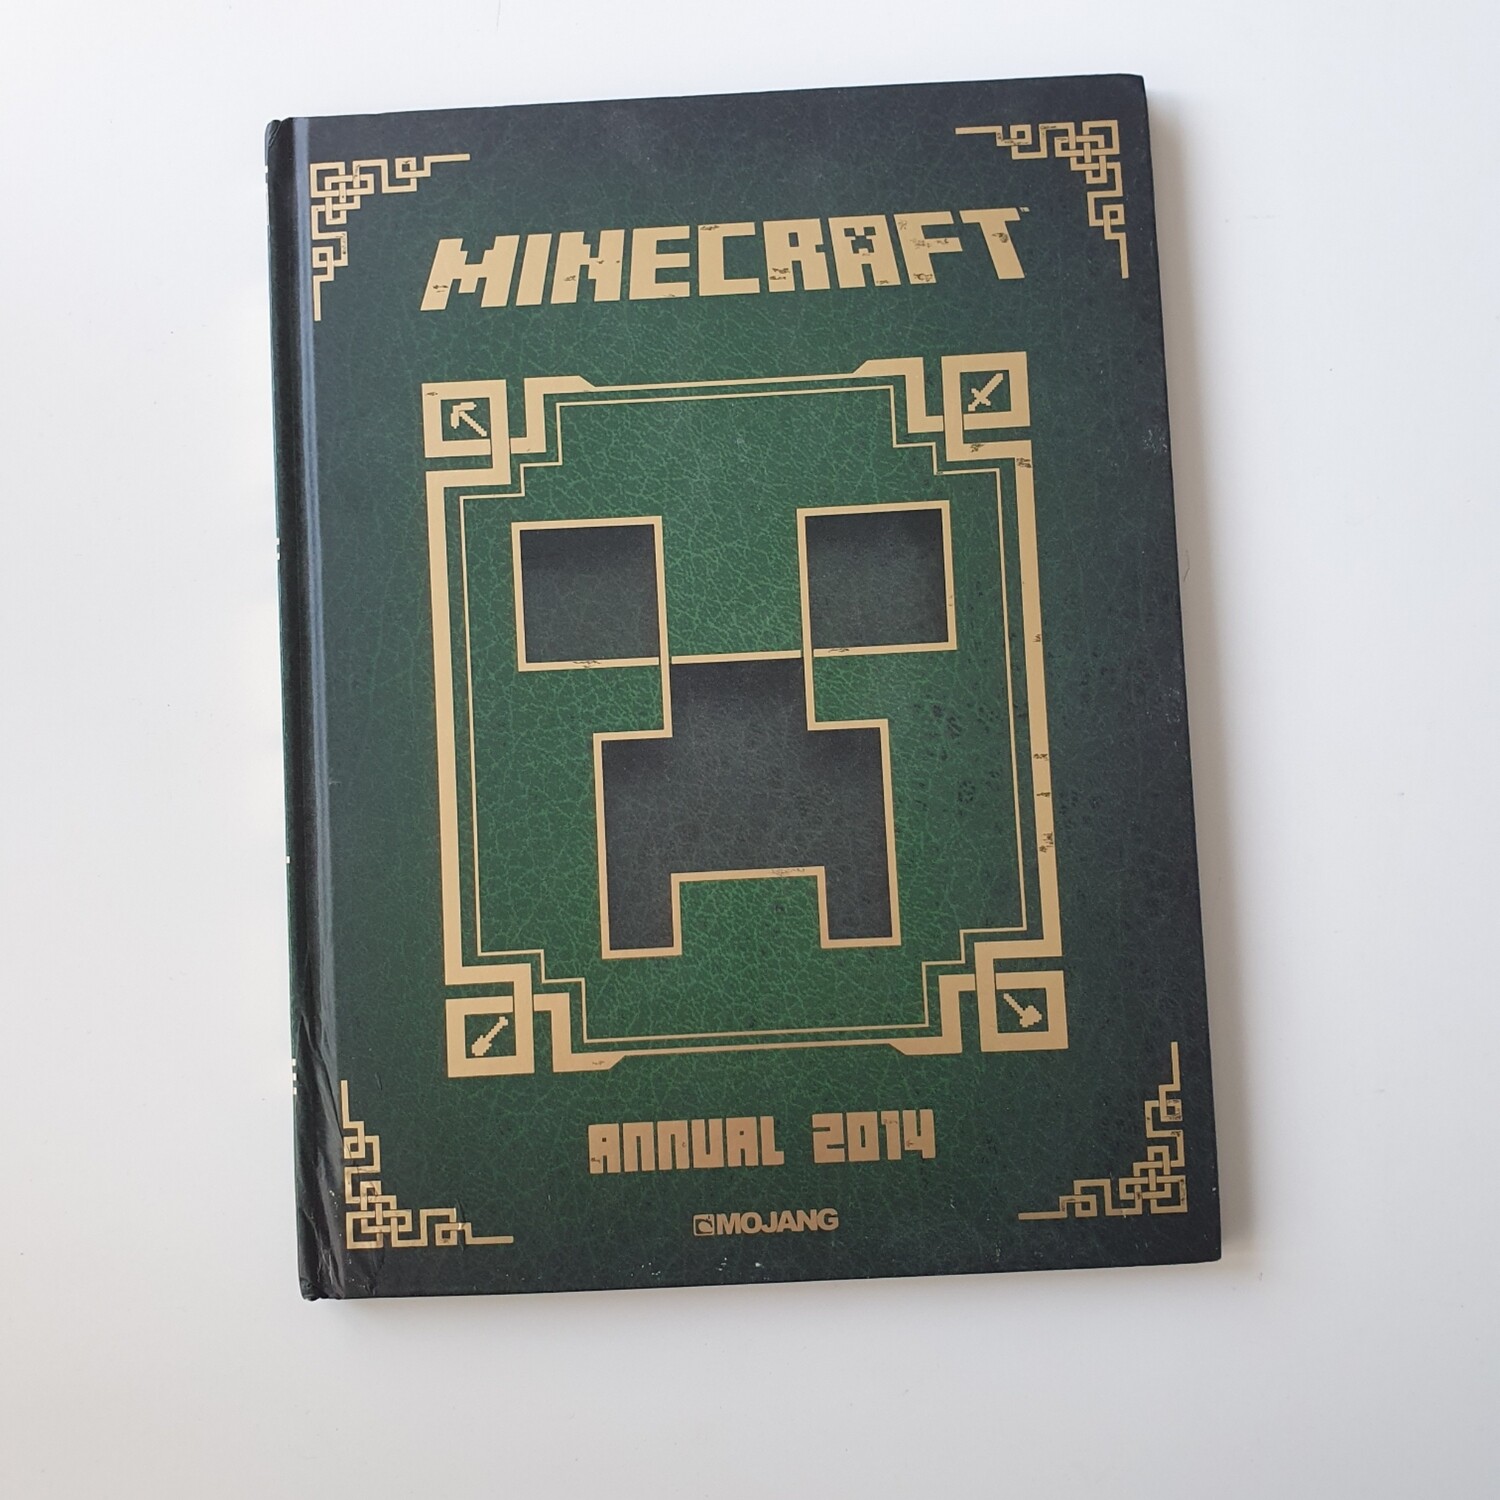 Minecraft 2014 annual